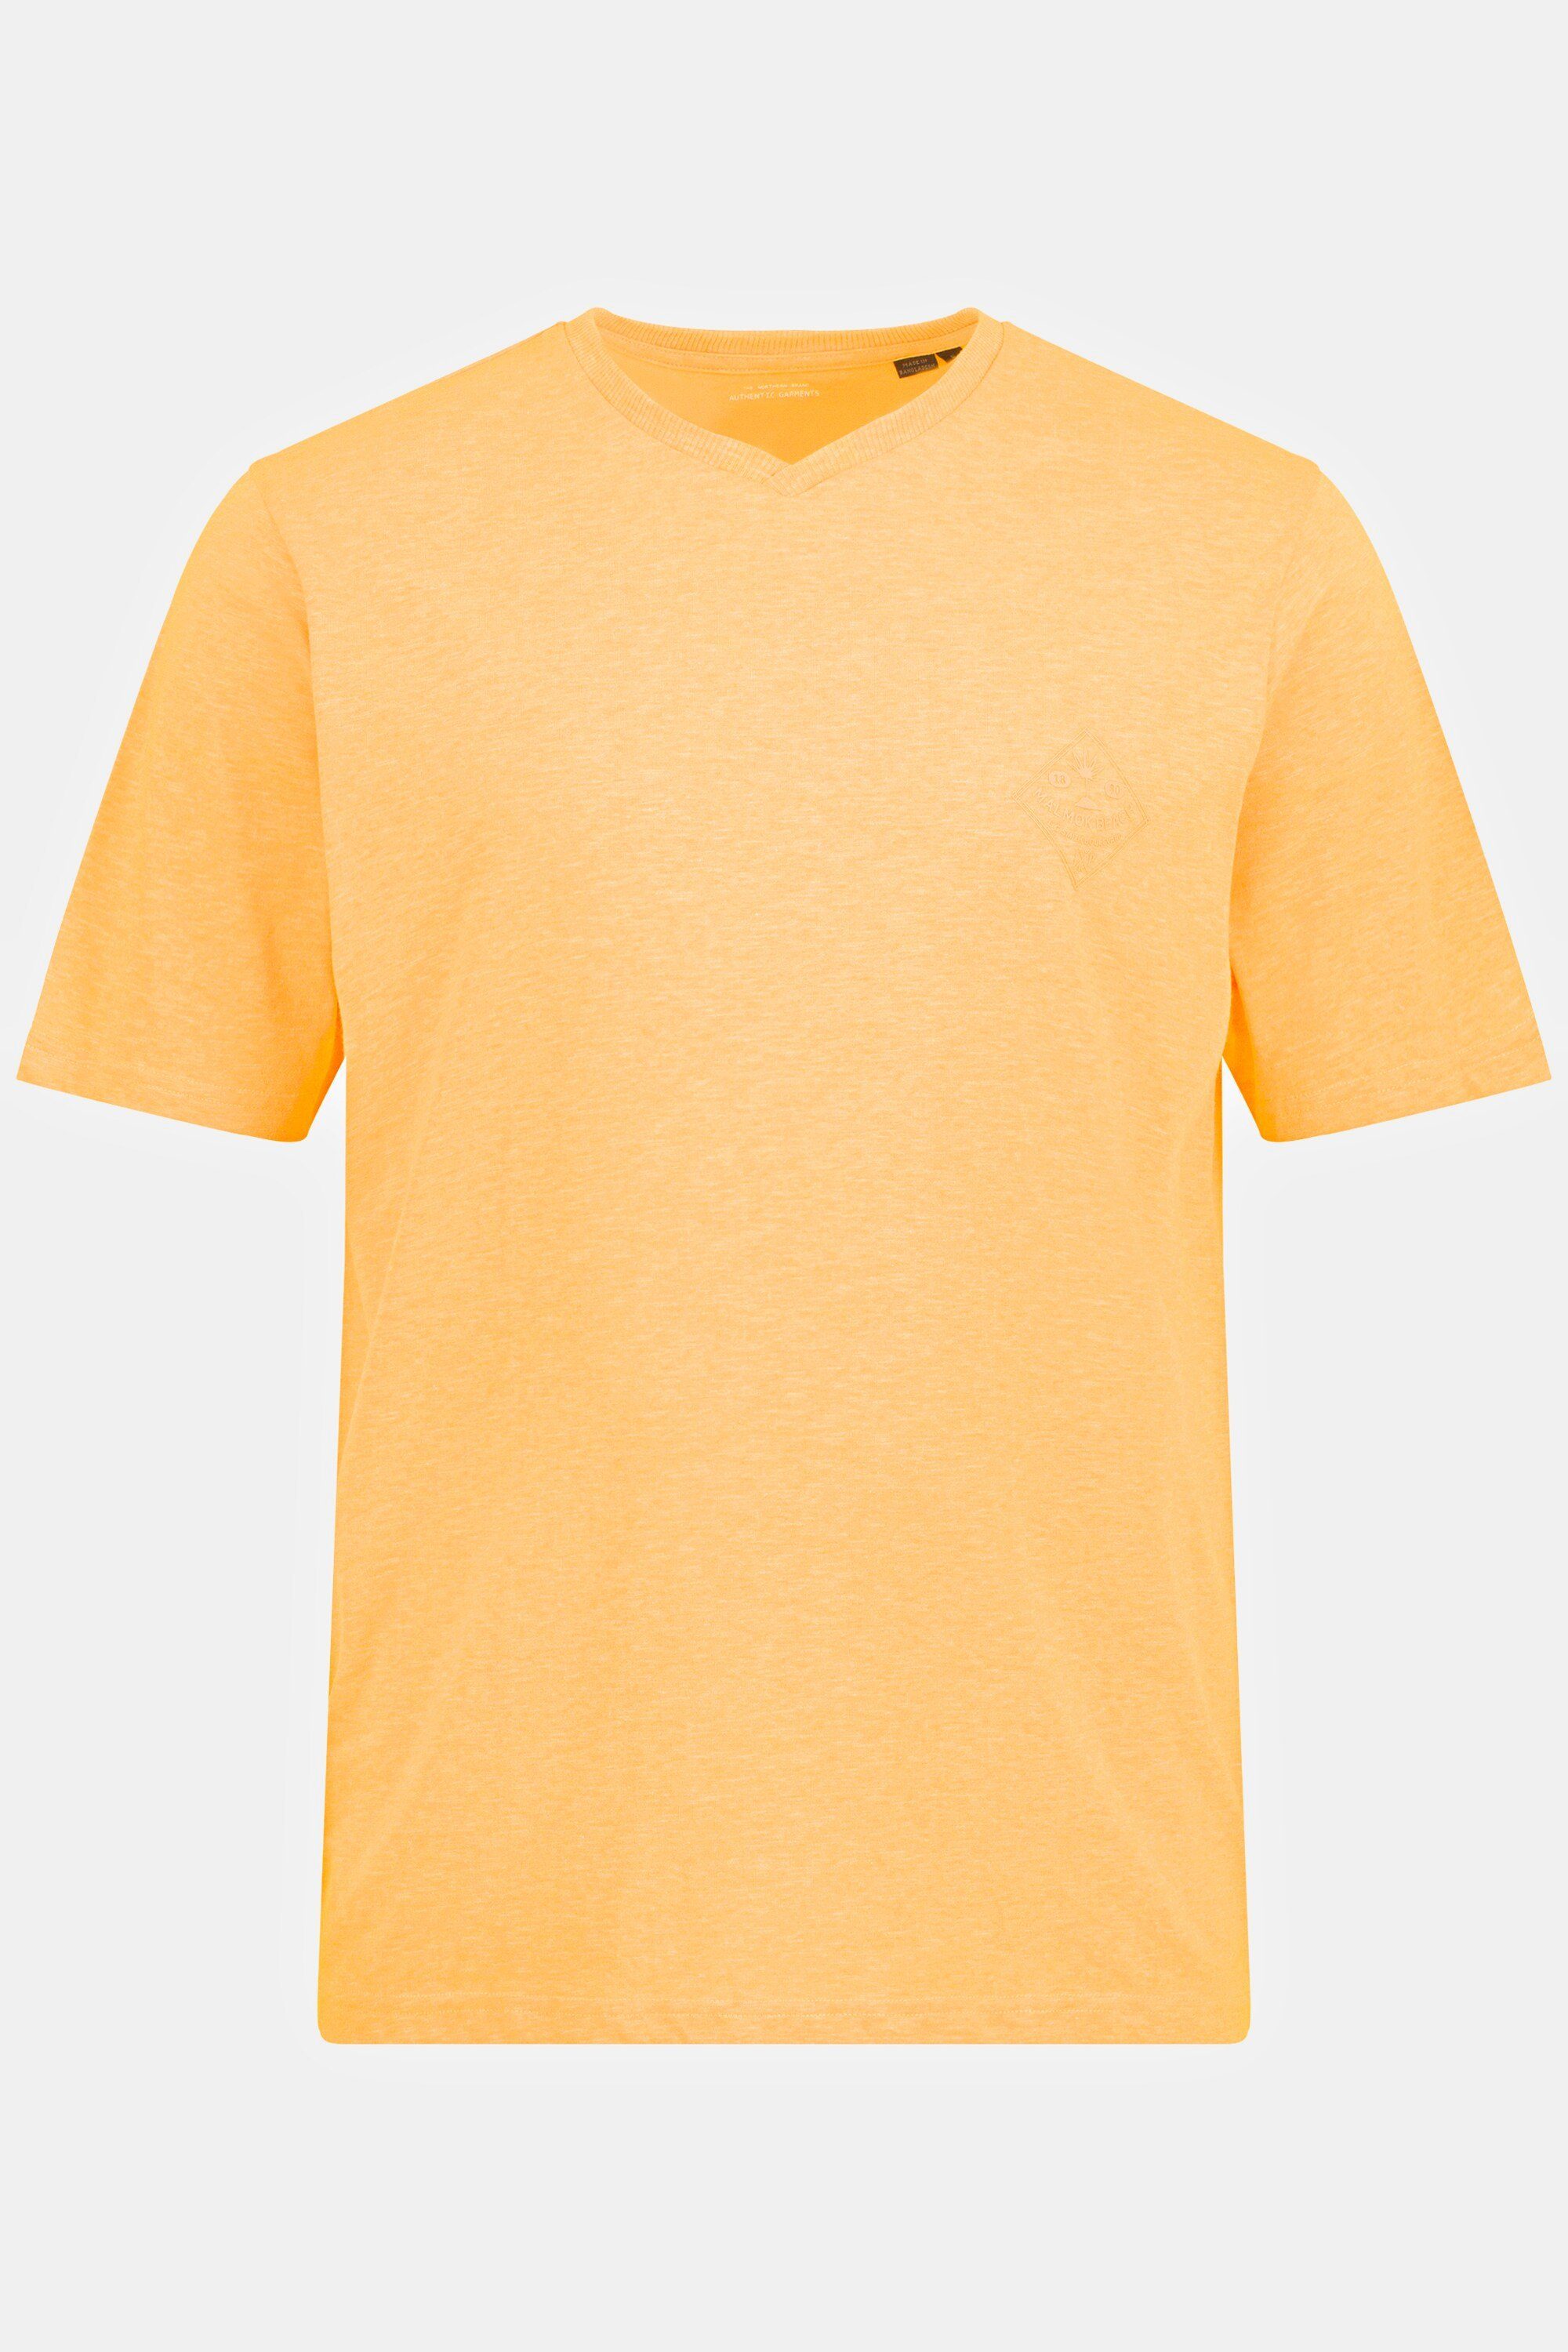 JP1880 neon T-Shirt T-Shirt V-Ausschnitt orange Halbarm